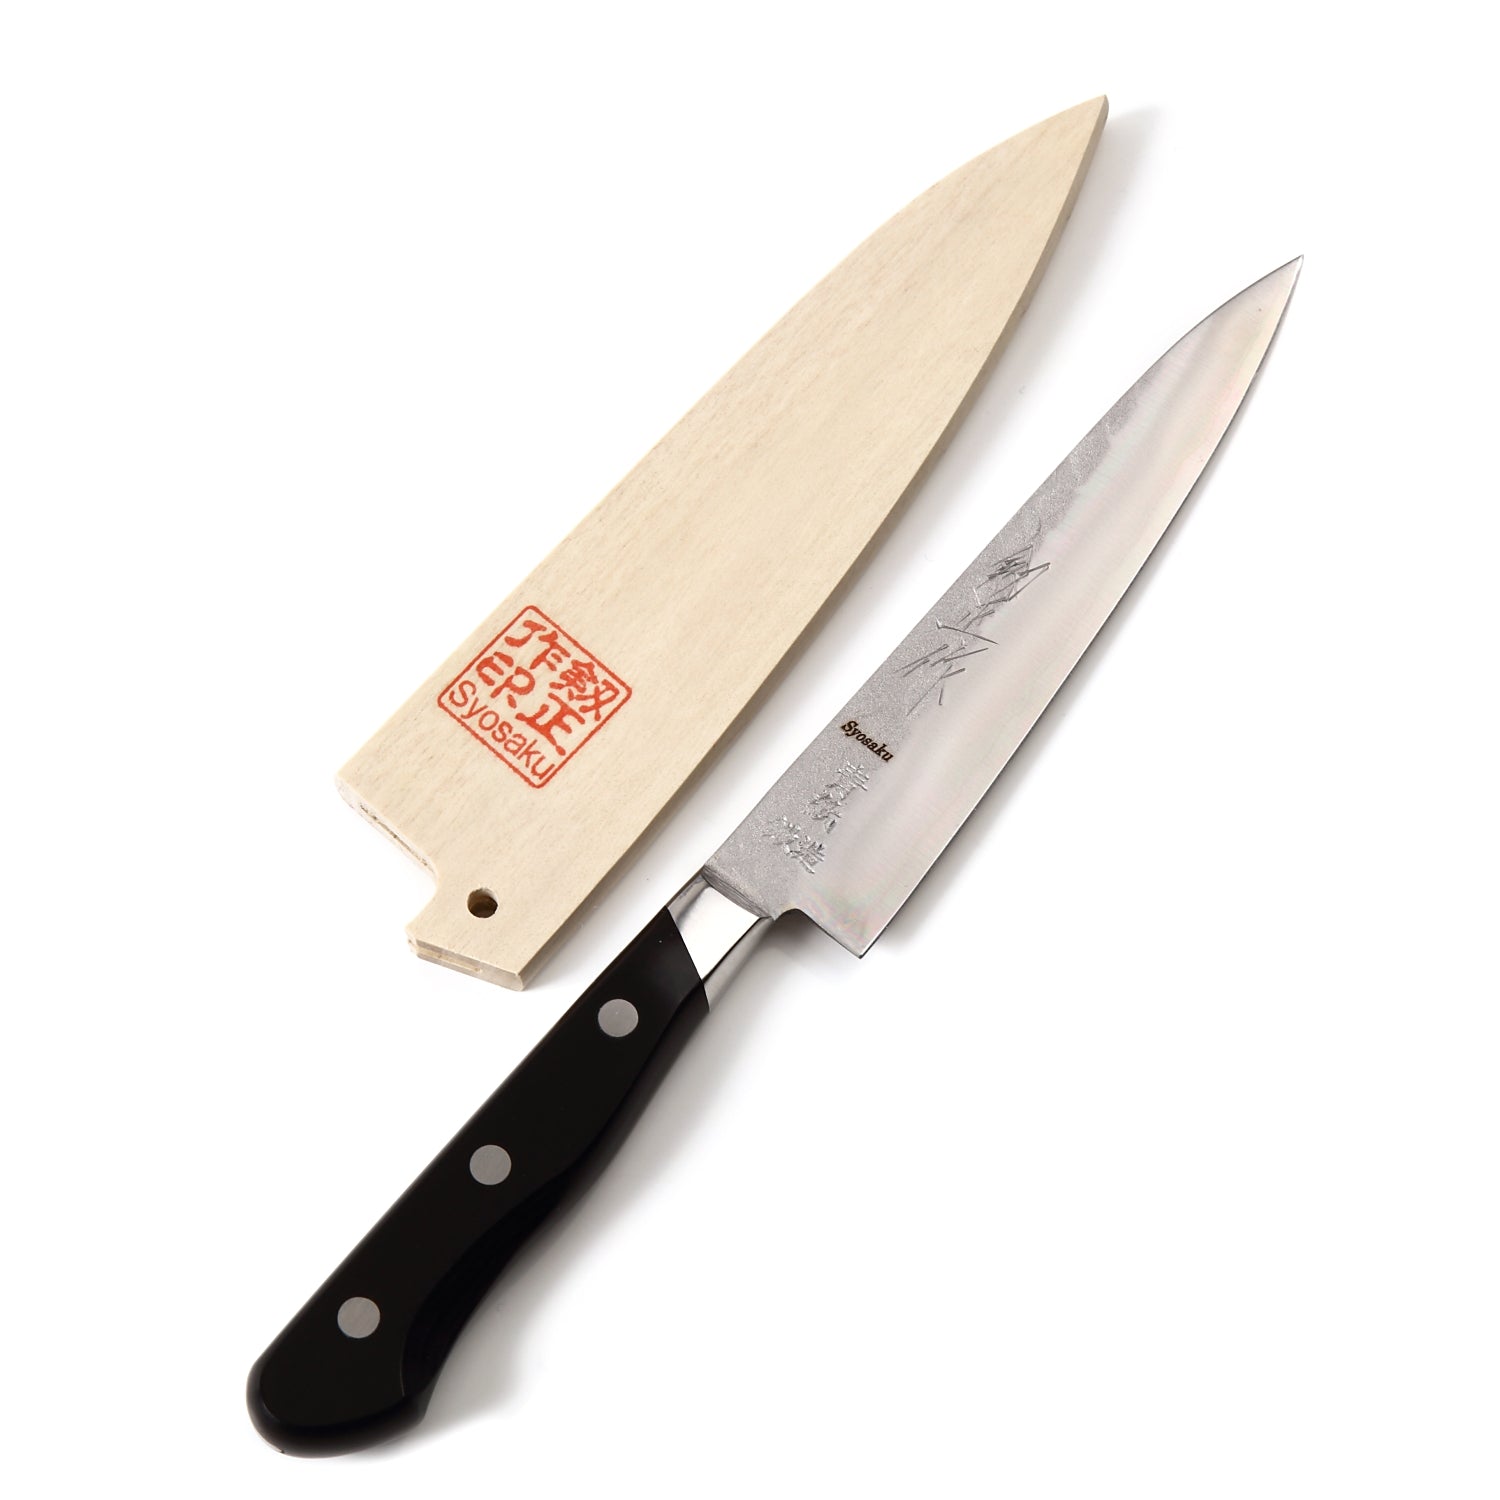 Syosaku Japanese Petty Knife Aoko (Blue Steel) No.2 Black Pakkawood Handle, 5.3-inch (135mm) with Magnolia Wood Sheath Saya Cover